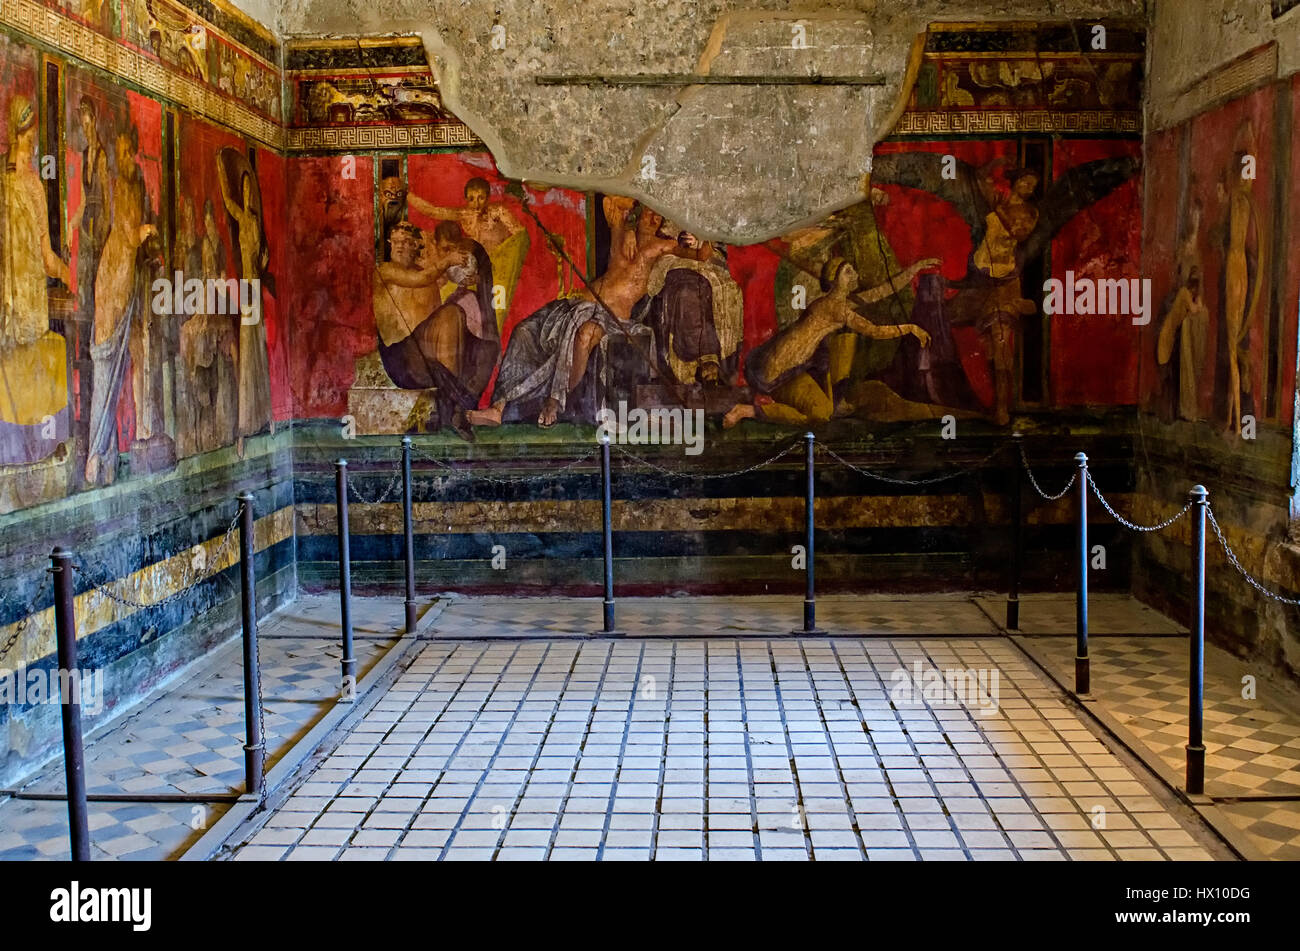 Fresco from Pompeii's Villa of Mysteries. Stock Photo